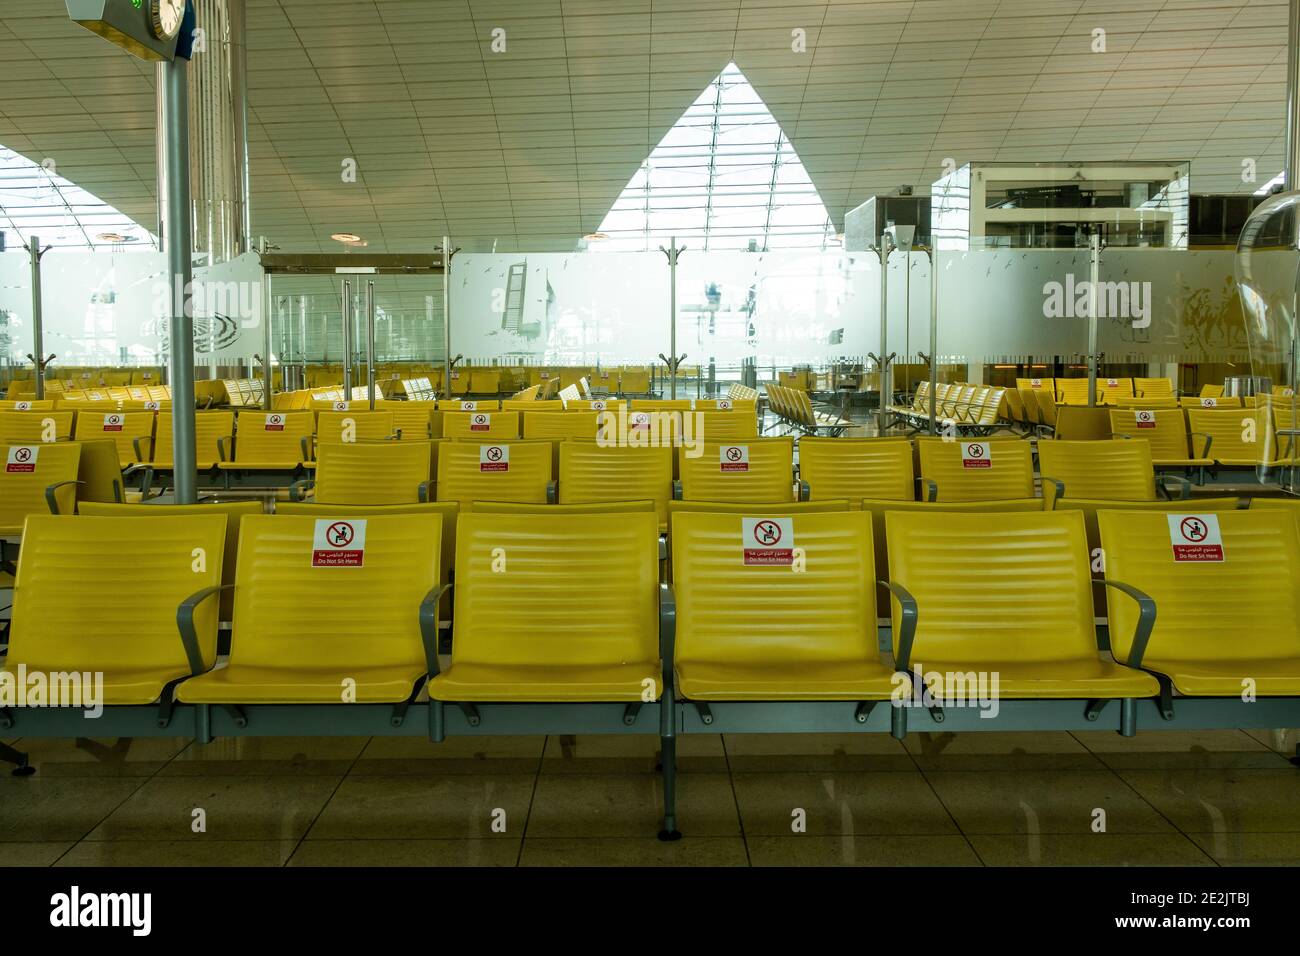 Dubai, UAE, 20.11.2020. Rows of empty seats at Dubai International Airport DXB terminal with Do not seat signs due to coronavirus pandemic. Stock Photo